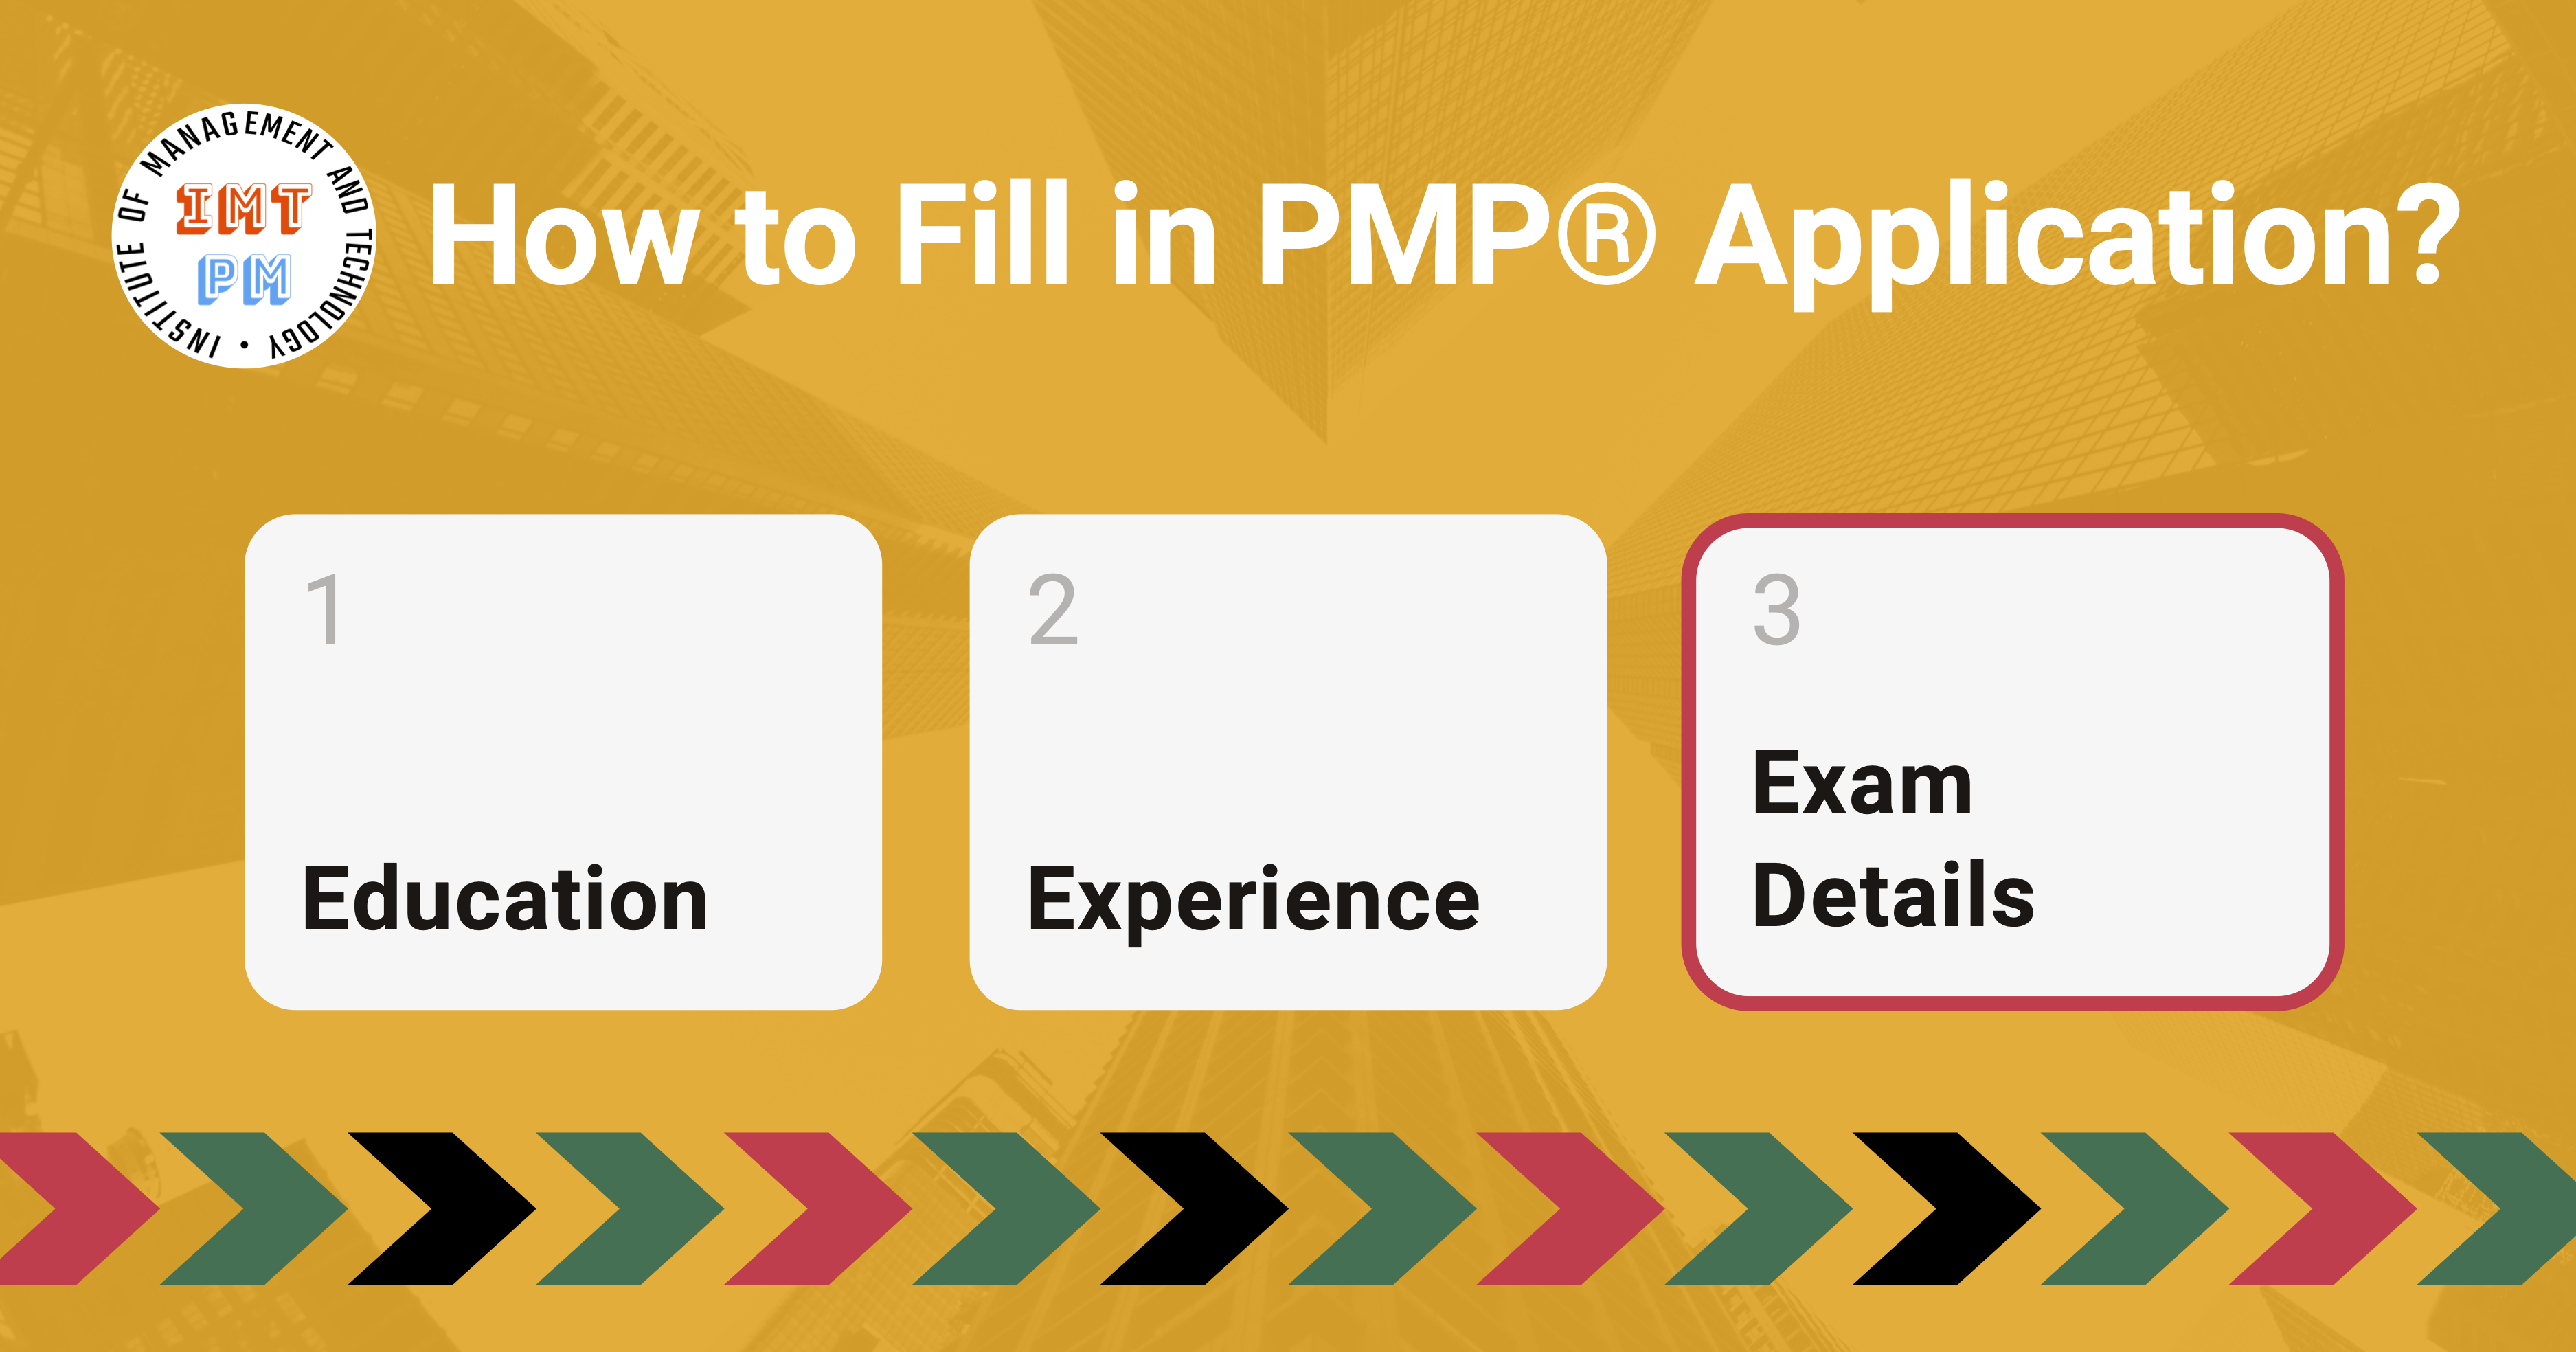 35-pdus-pmp-exam-prep-discipline-agile-dasm-dassm-how-to-fill-in-PMP-application-exam-details